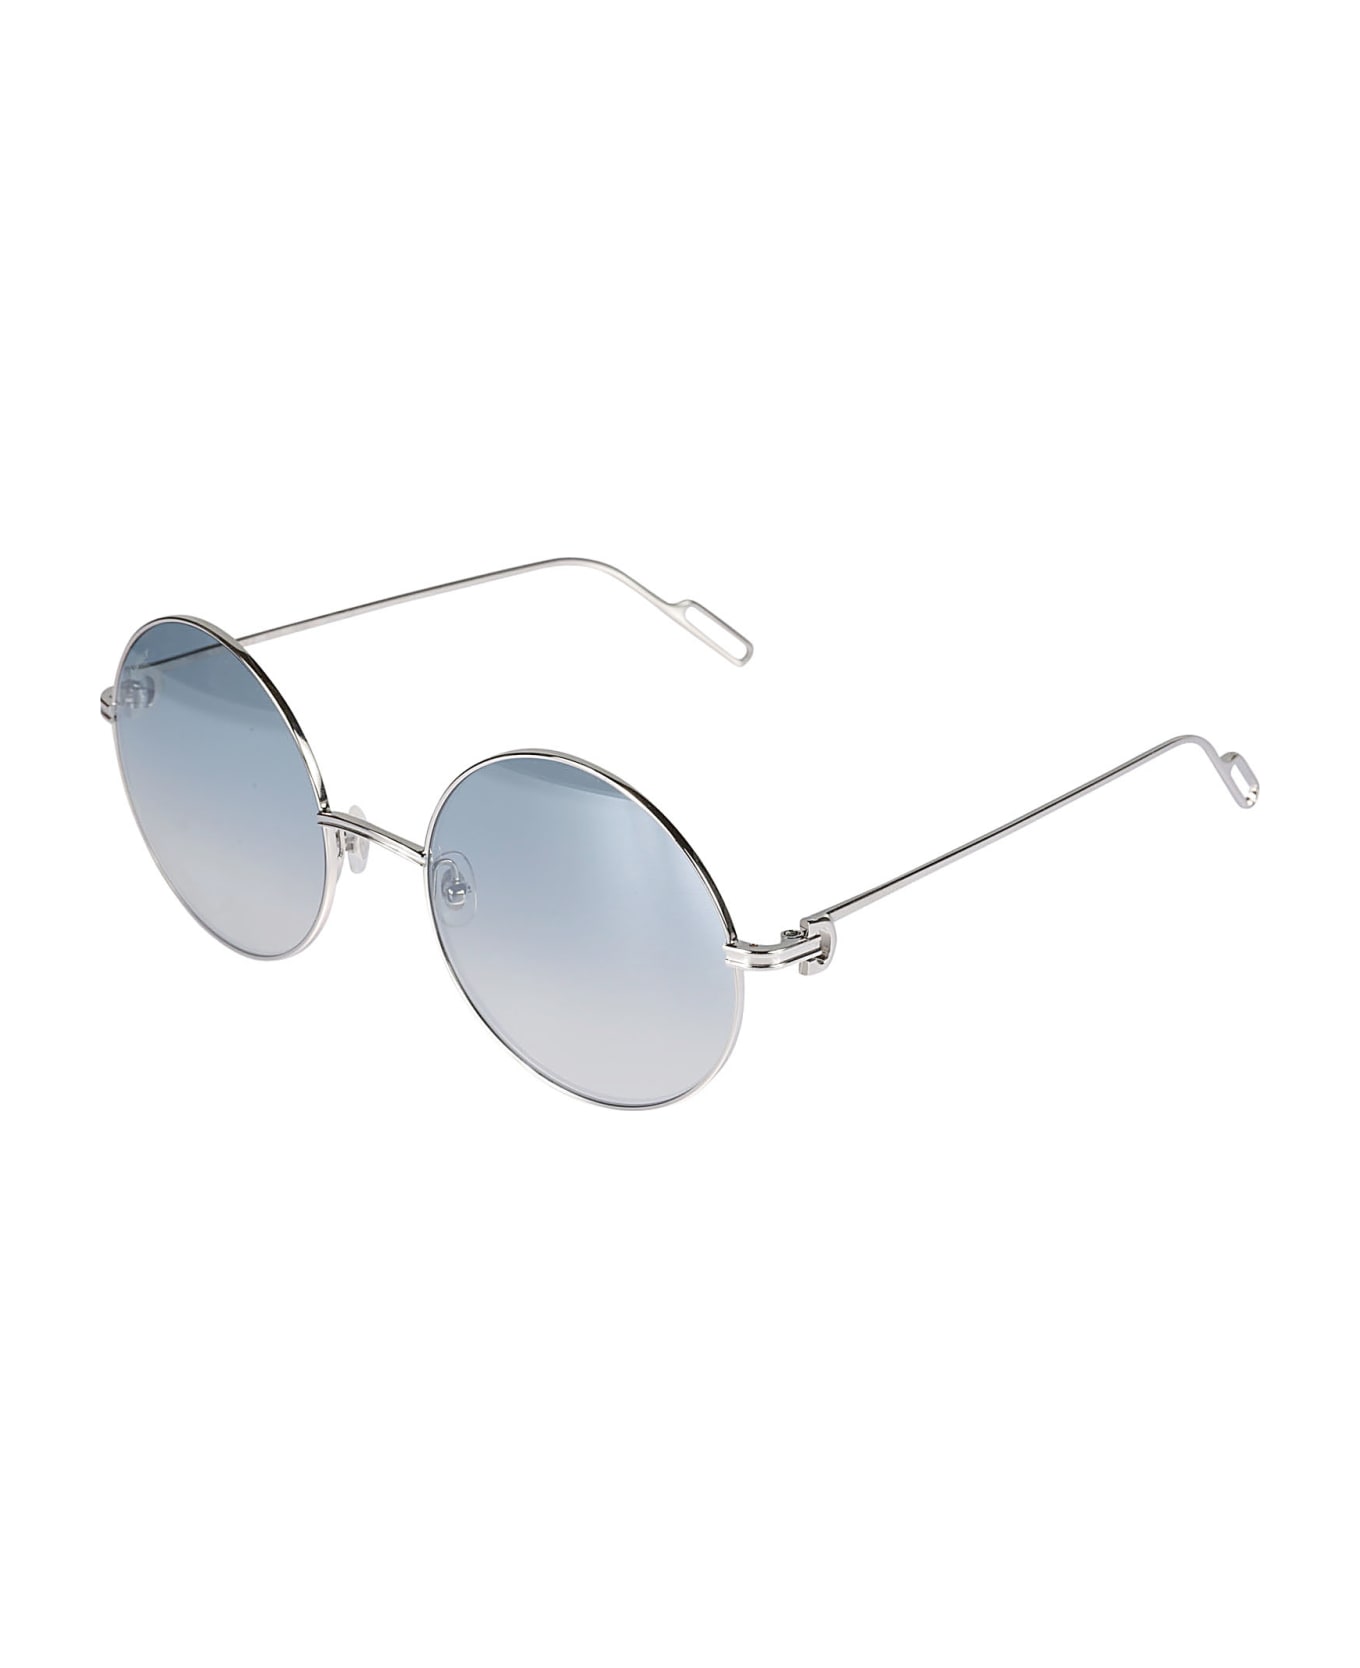 Cartier Eyewear Premiere De Cartier Sunglasses - 006 silver silver blue